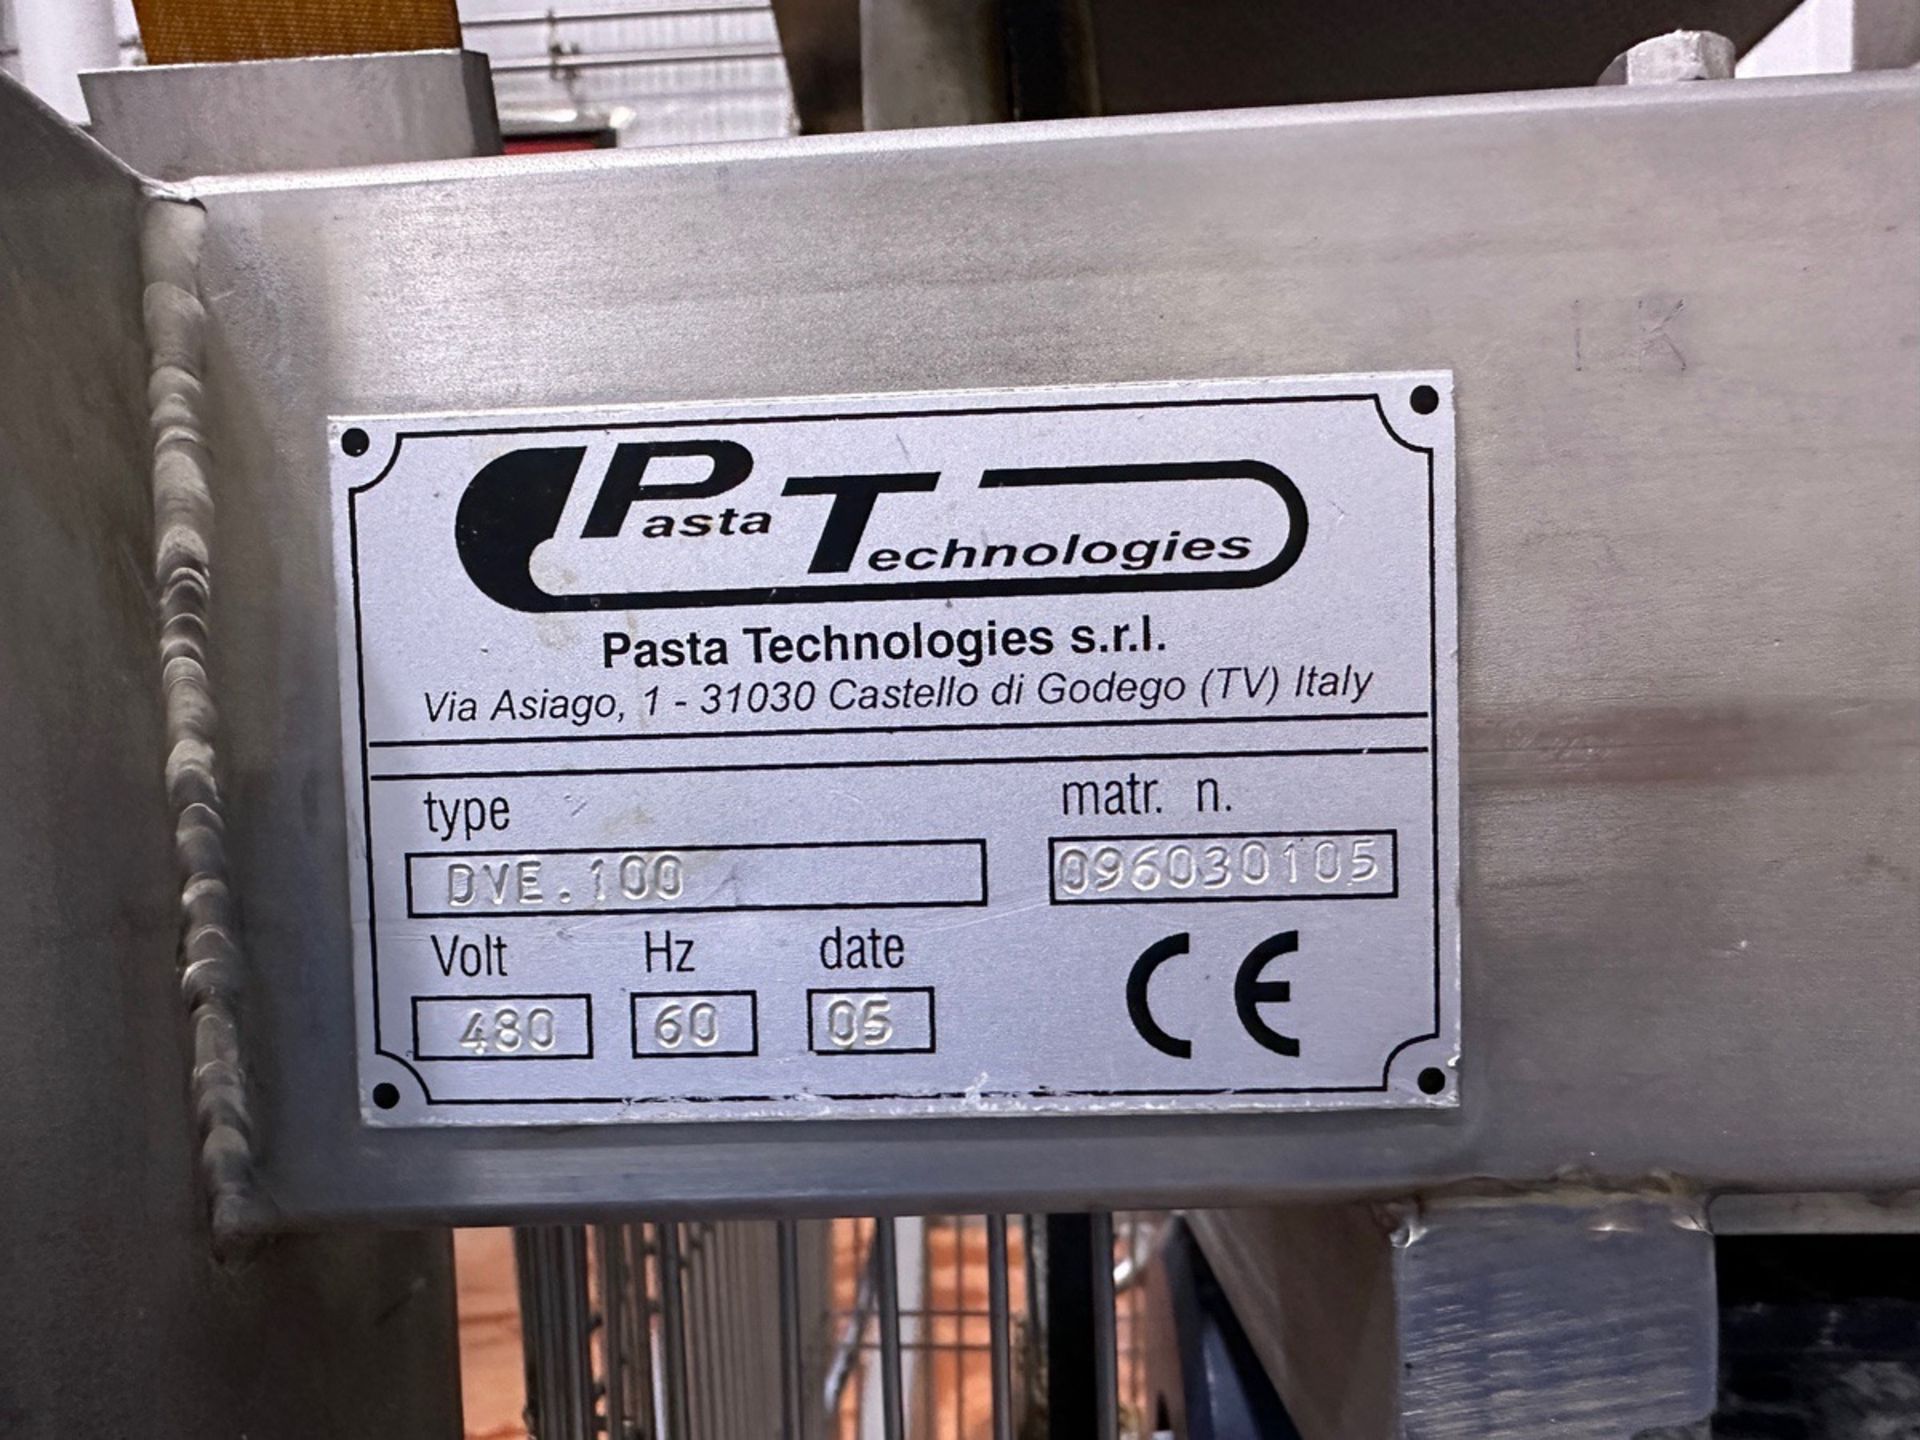 Pasta Technologies DVE 100 Vibratory Conveyor, S/N 096030105 - Image 4 of 4